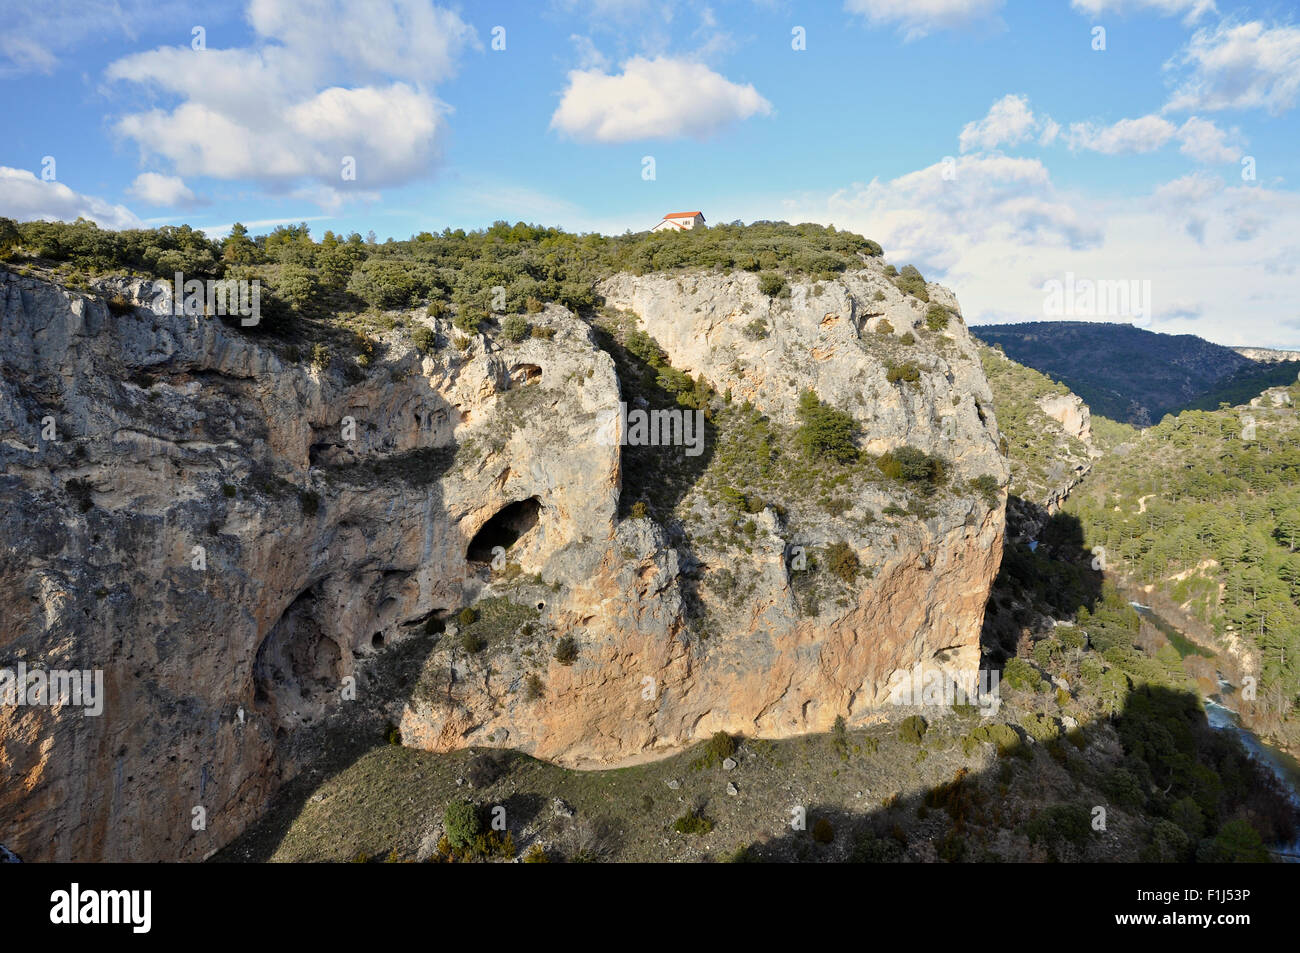 Scenery view from Ventano del Diablo lookout showing a ravine with Jucar river at the bottom (Villalba de la Sierra, Cuenca, Castilla-La Mancha,Spain) Stock Photo